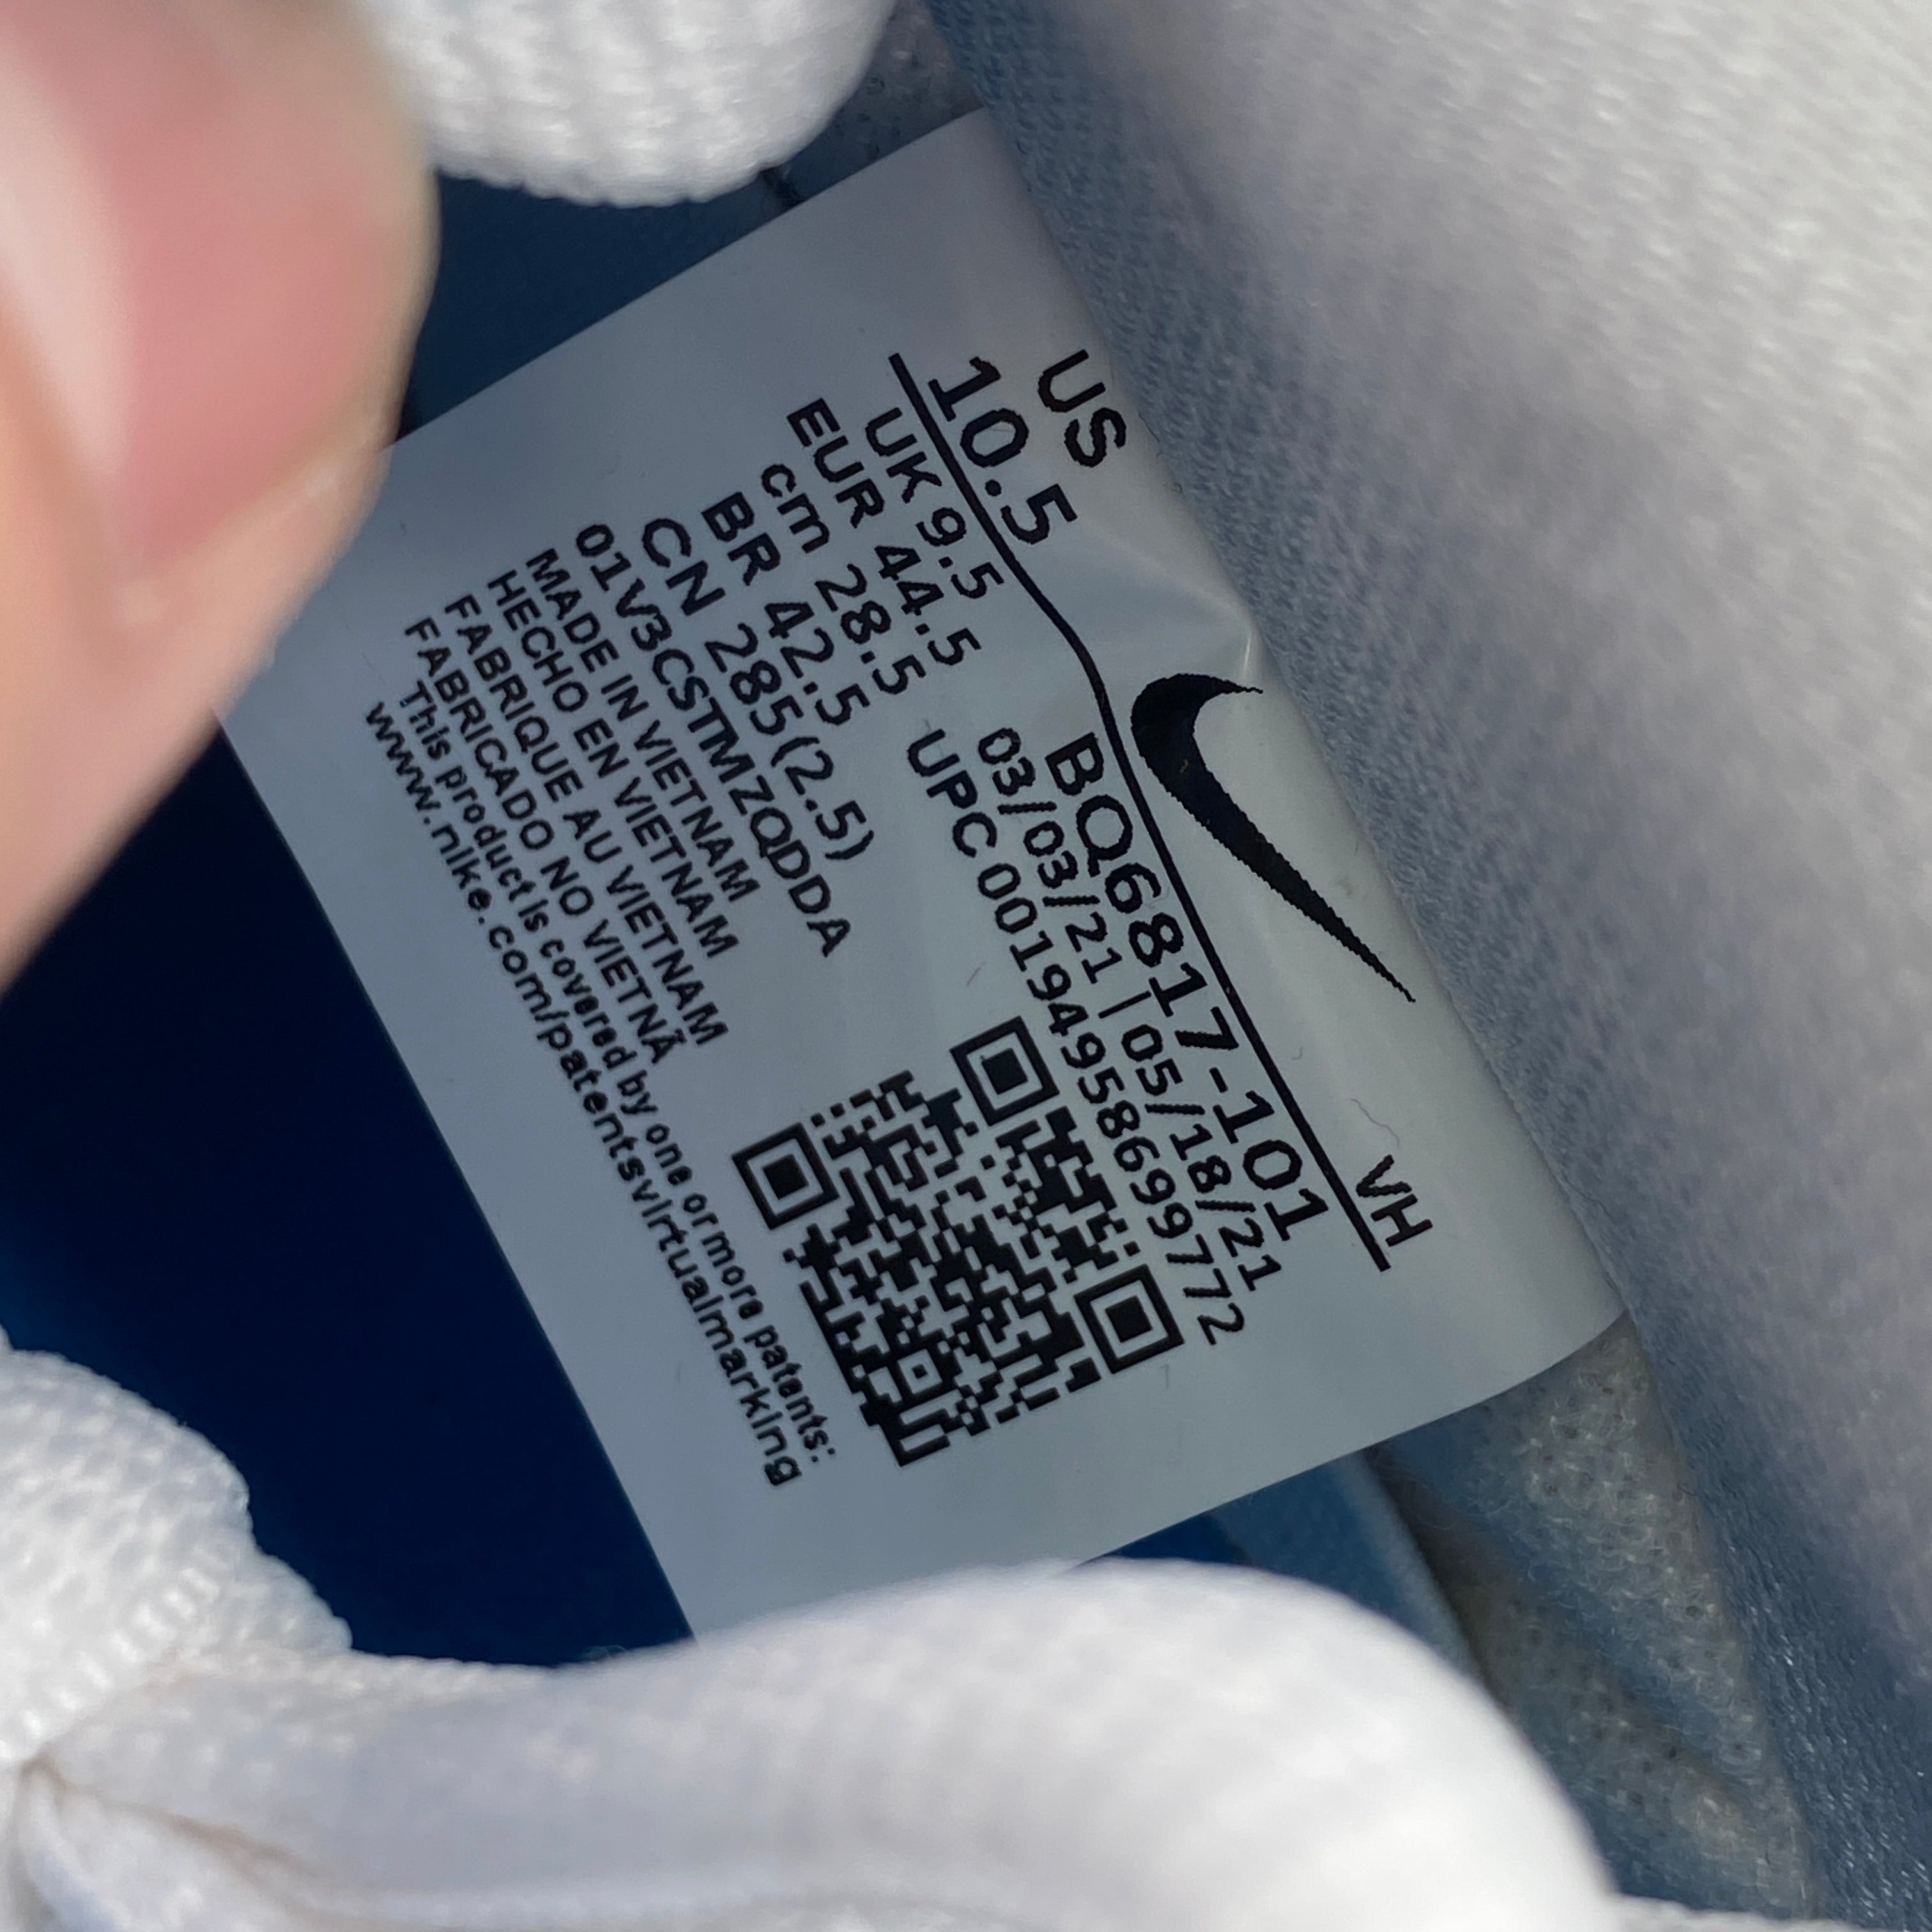 Nike SB Dunk Low Pro "Laser Blue" 2021 New Size 10.5